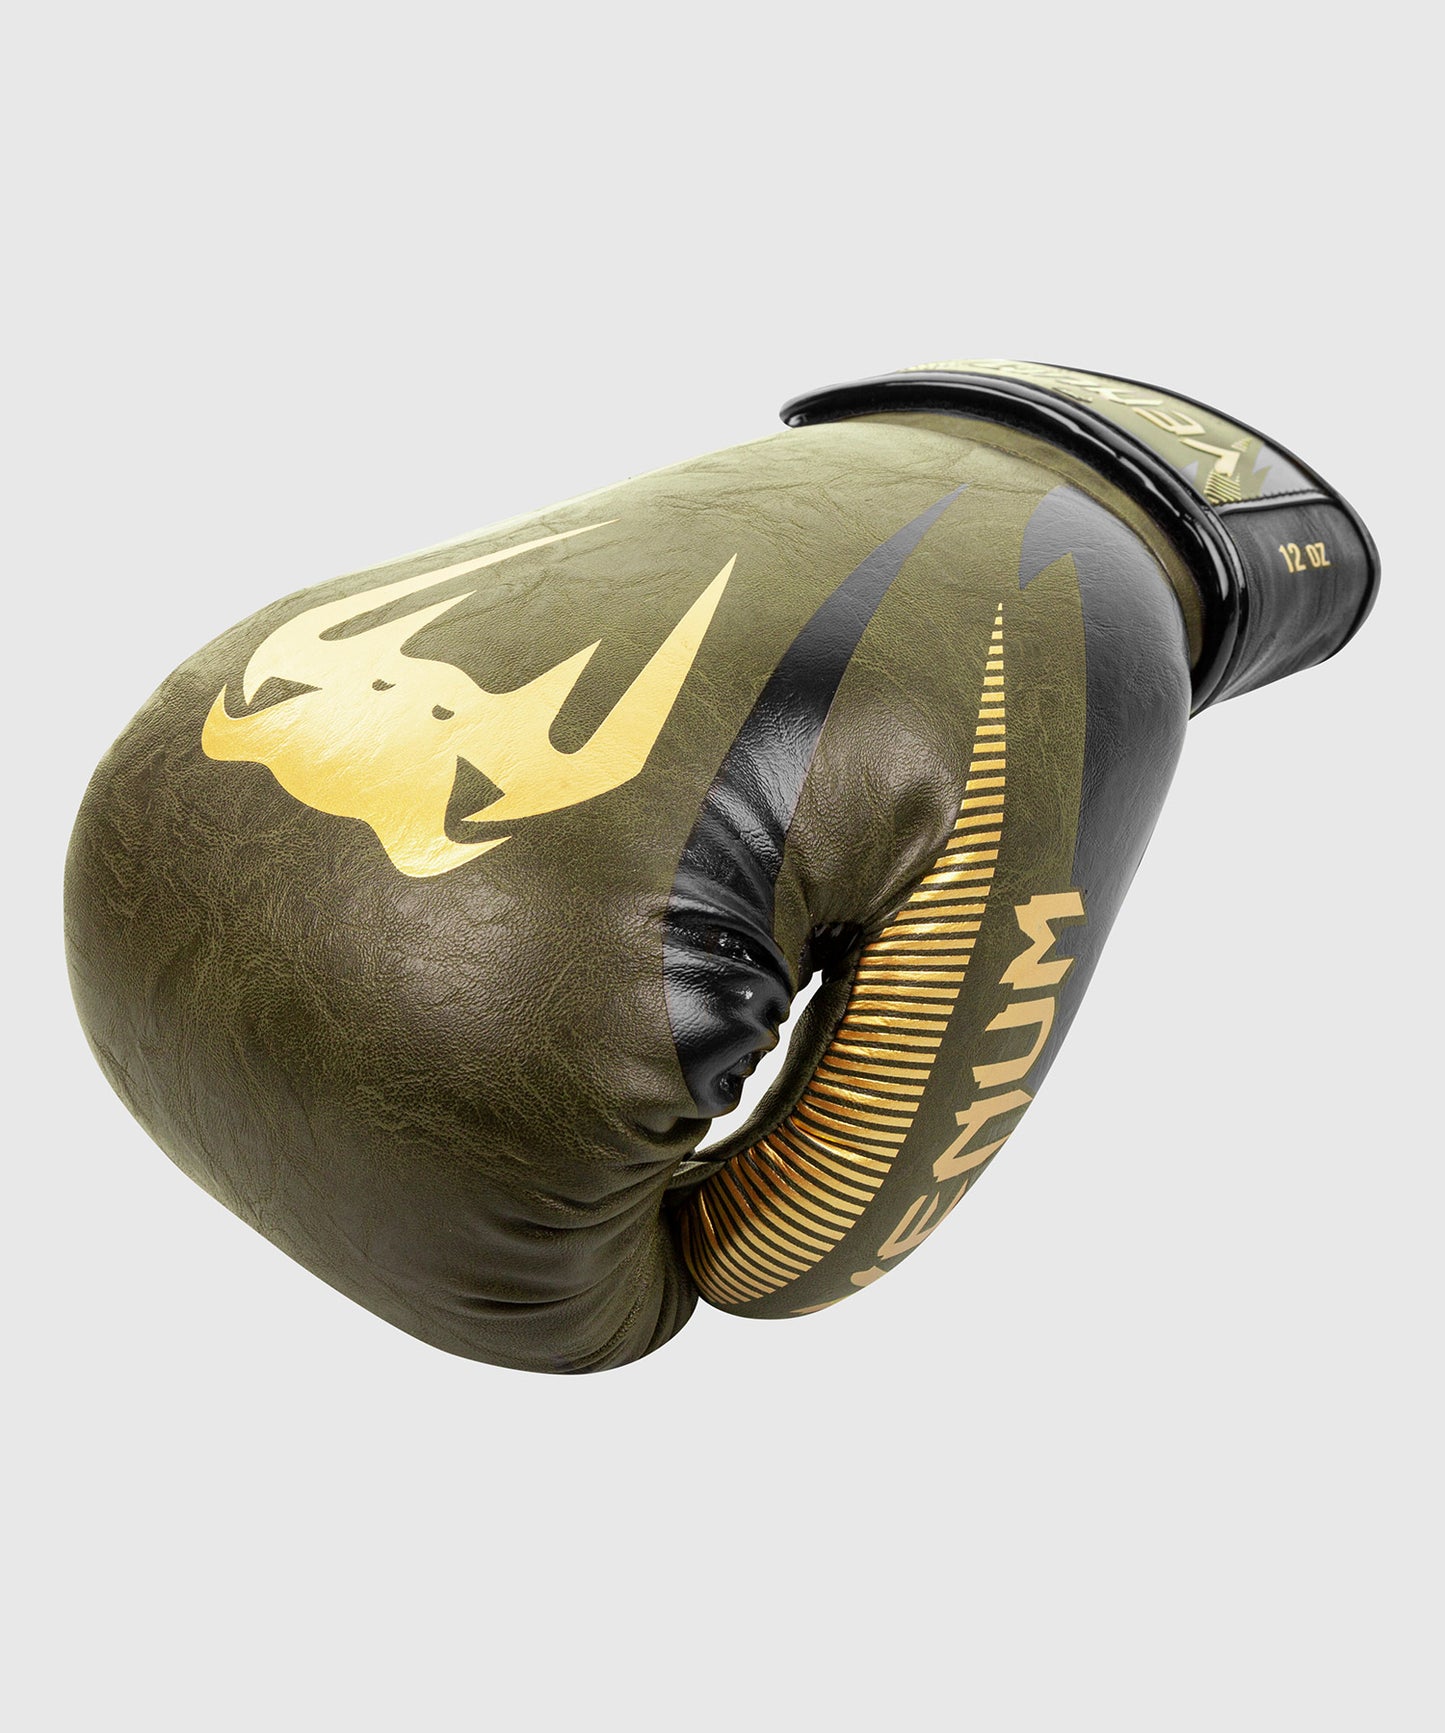 Venum Impact Boxing Gloves - Khaki/Gold